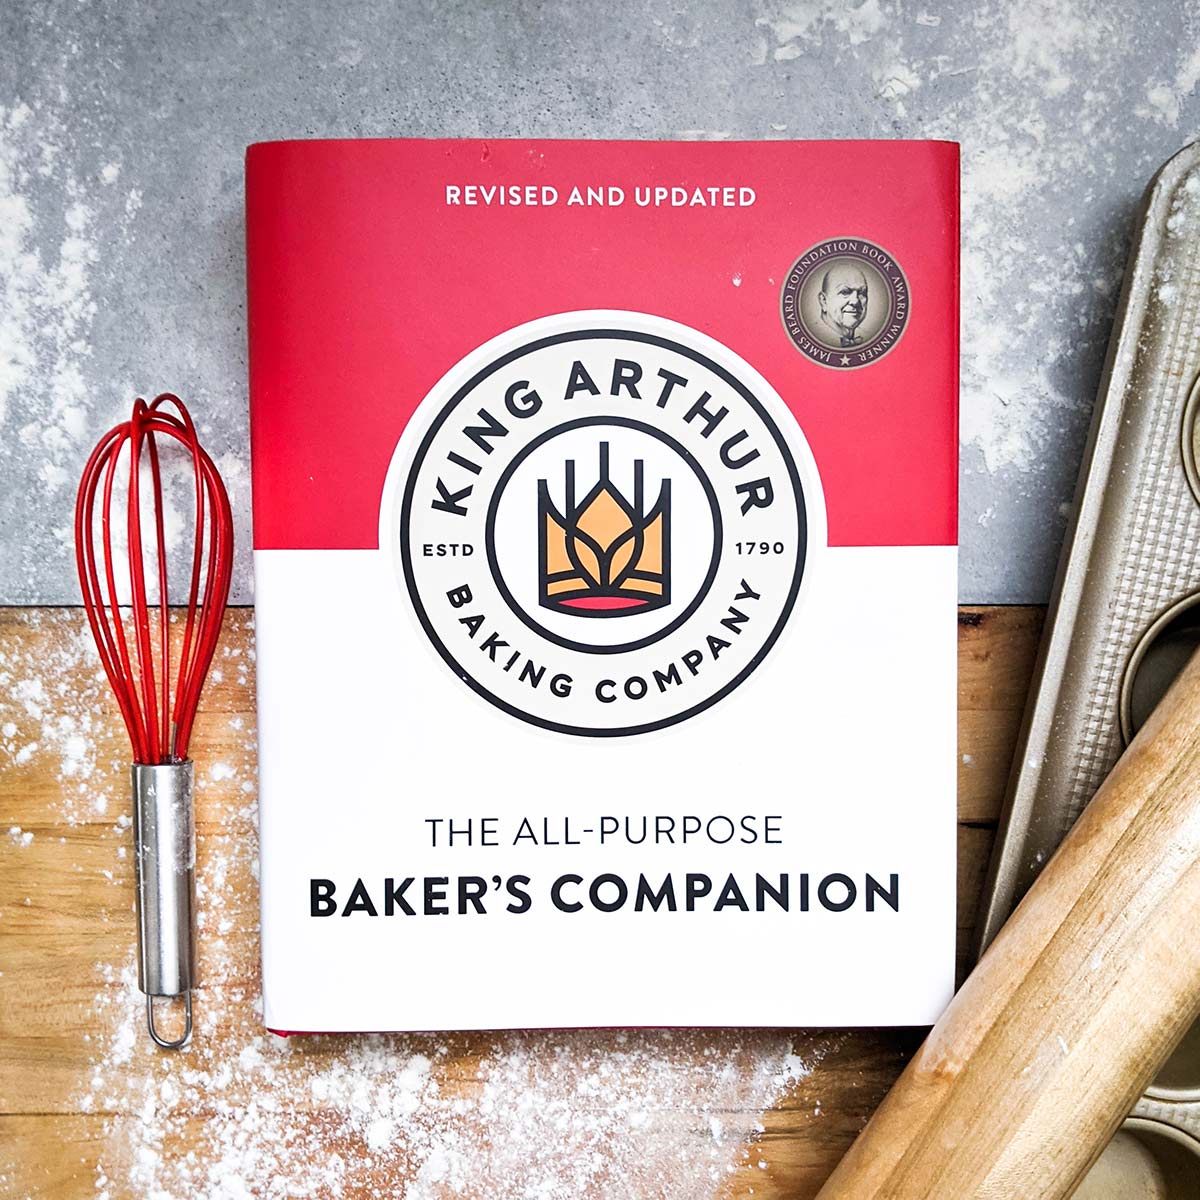 King Arthur Baking Companion cookbook with baking tools